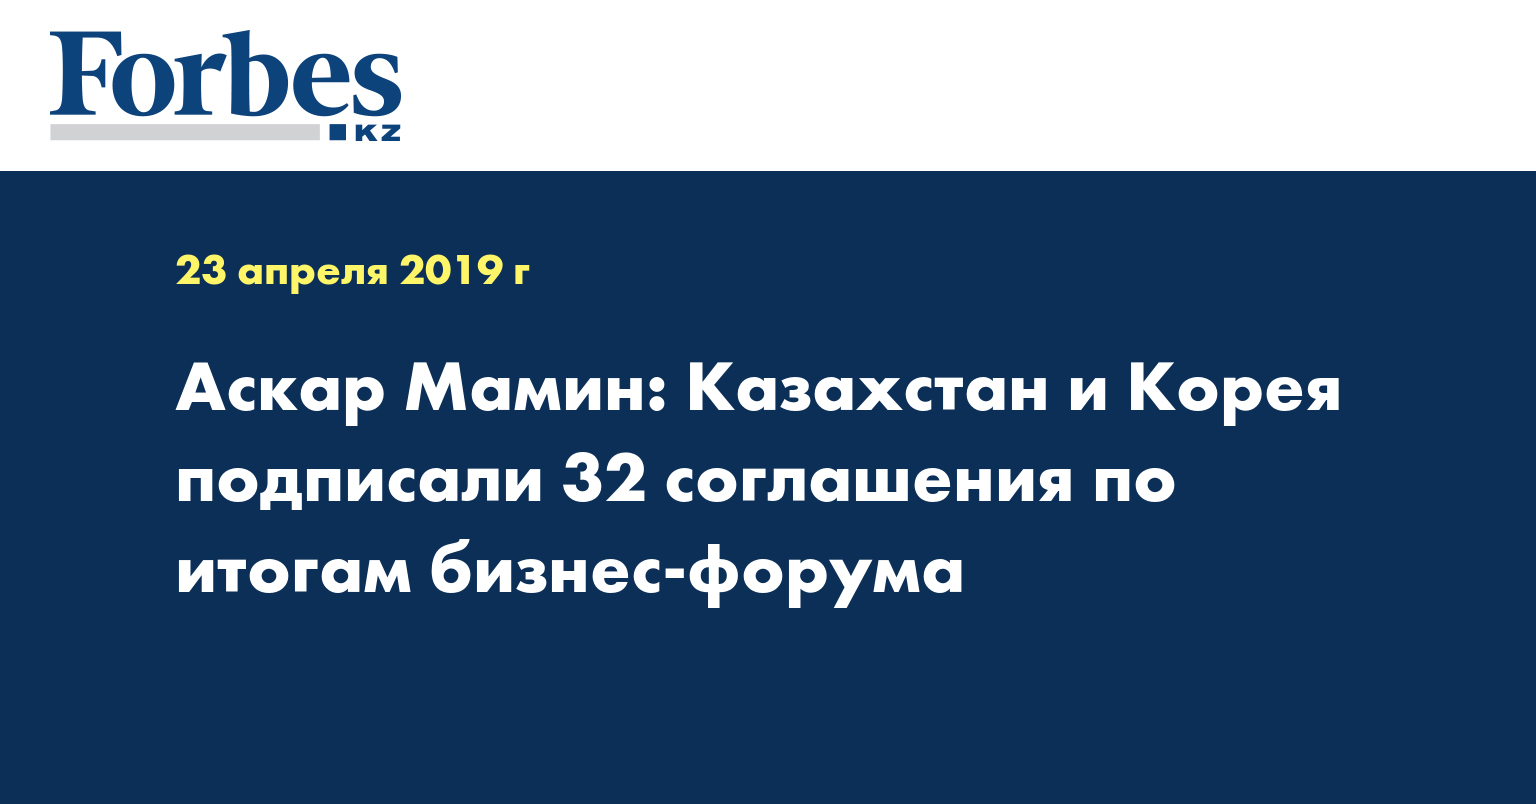 Аcкар Мамин: Казахстан и Корея подписали 32 соглашения по итогам бизнес-форума